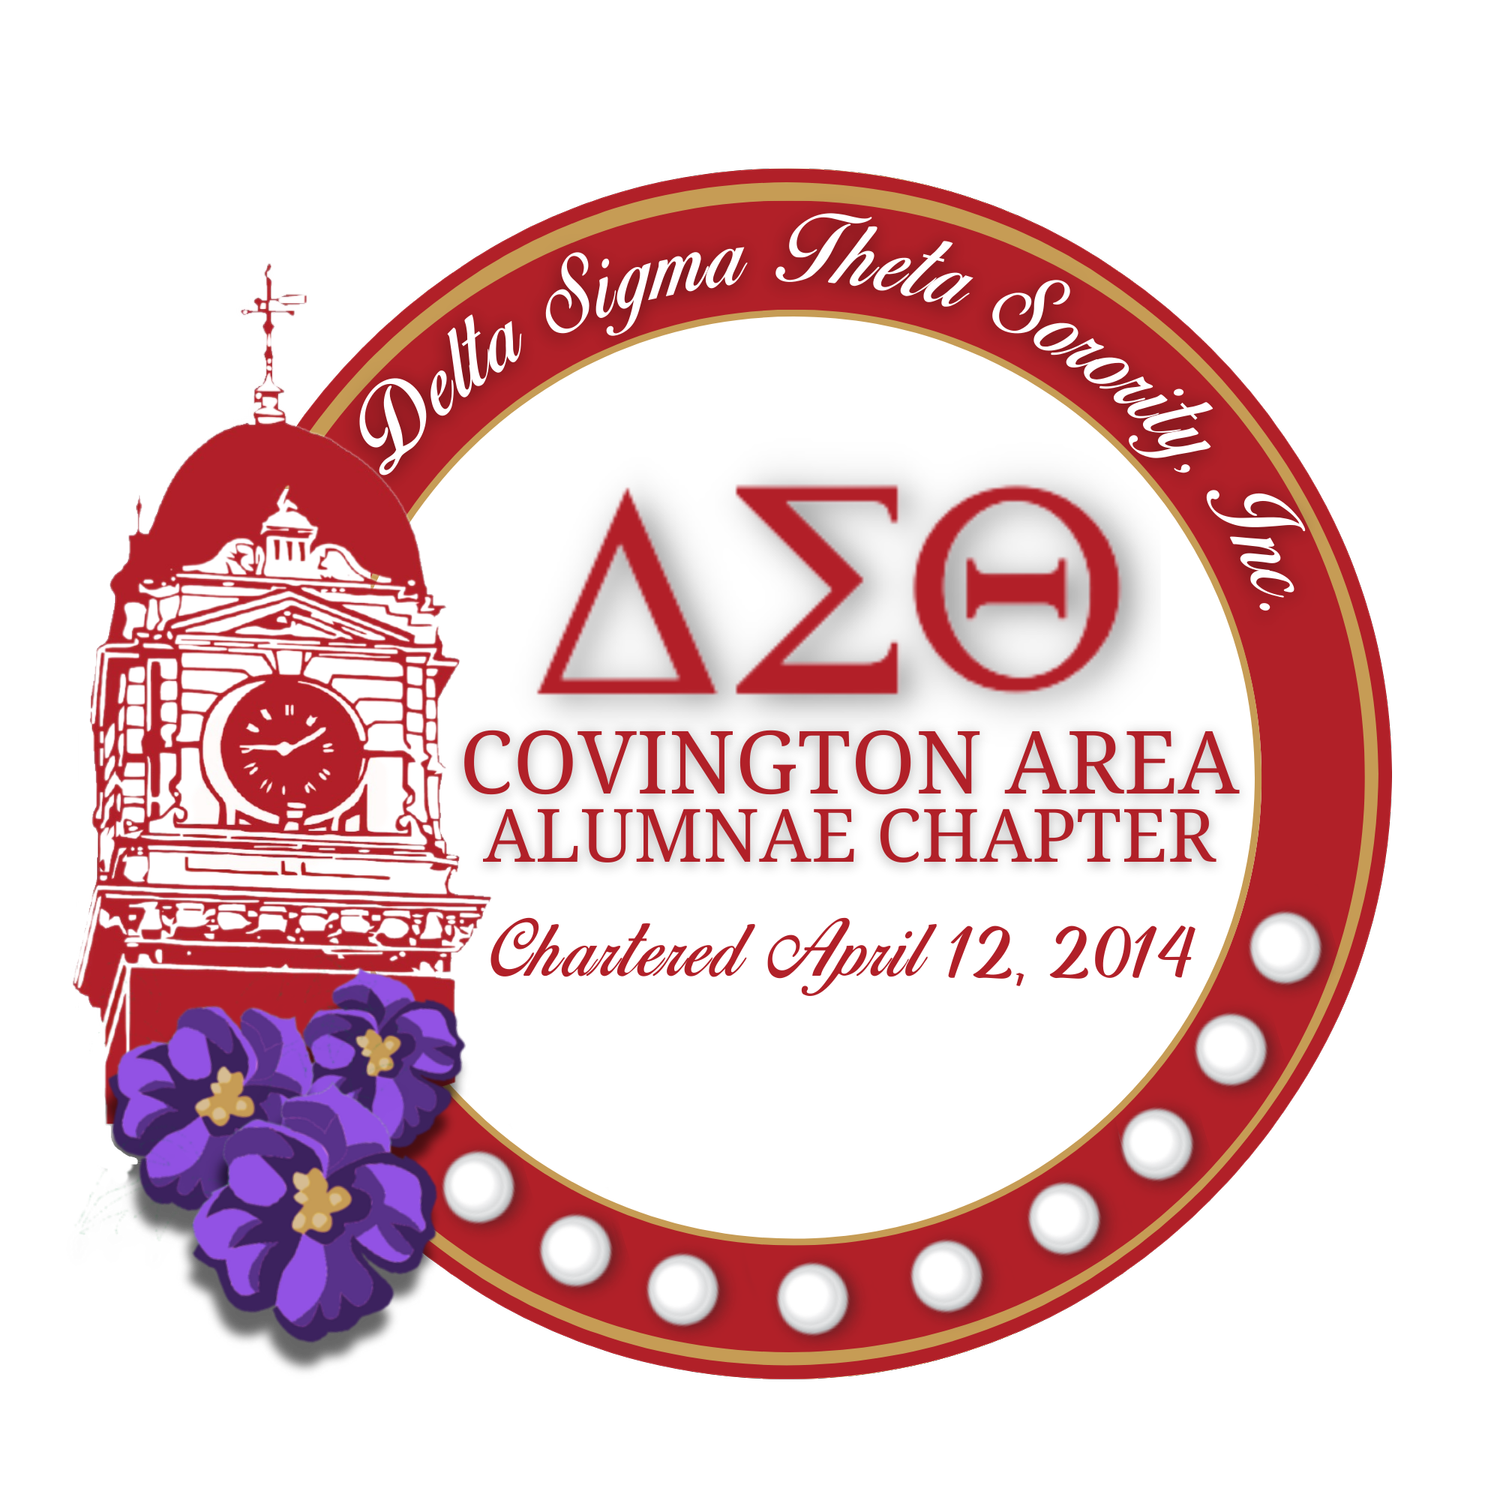 Covington Area Alumnae Chapter of Delta Sigma Theta Sorority, Inc. 